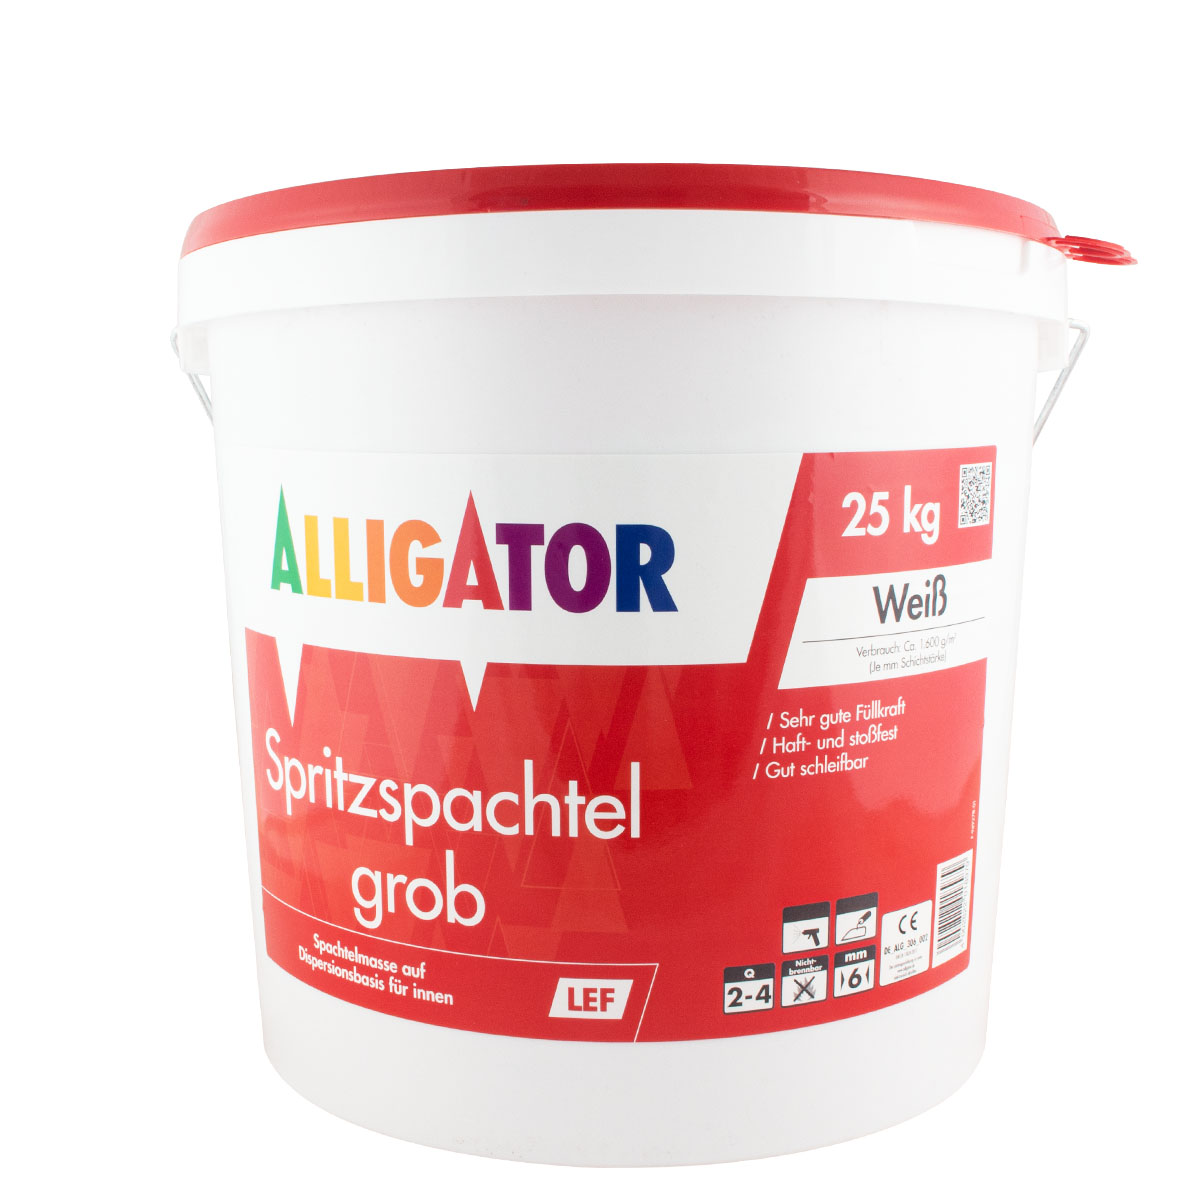 alligator_spritzspachtel-grob_25kg_weiss_gross